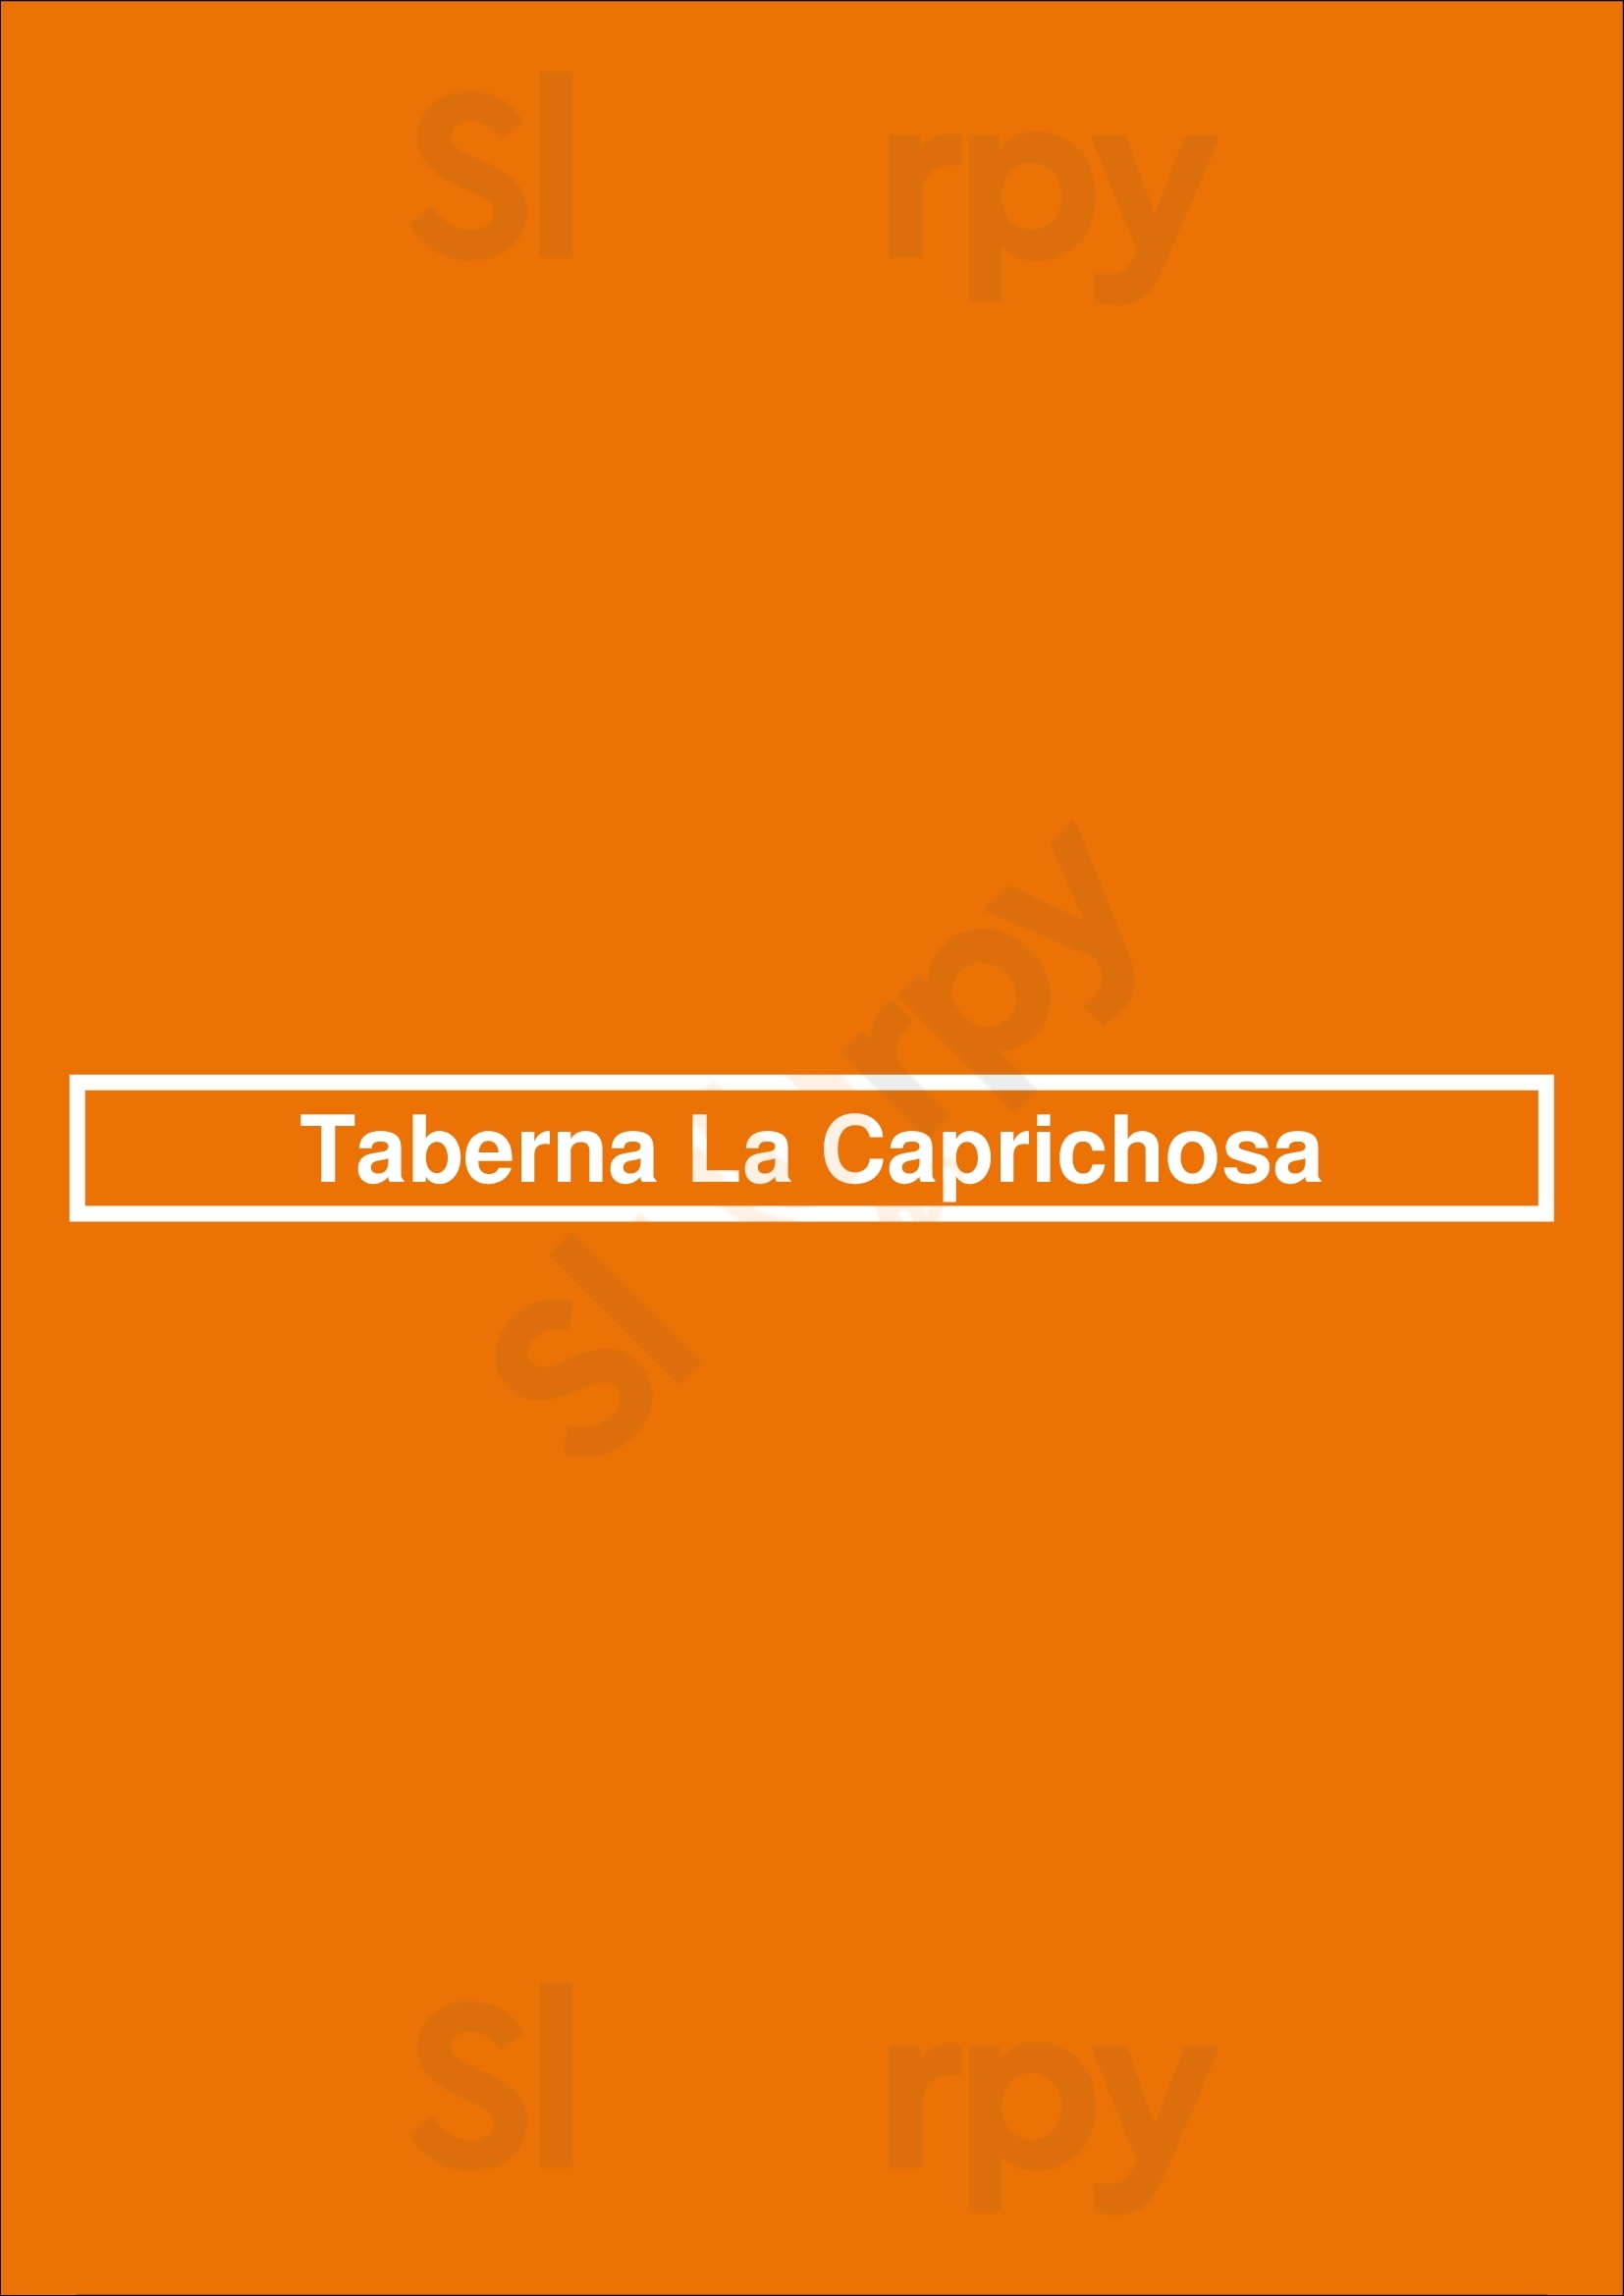 Taberna La Caprichosa Madrid Menu - 1